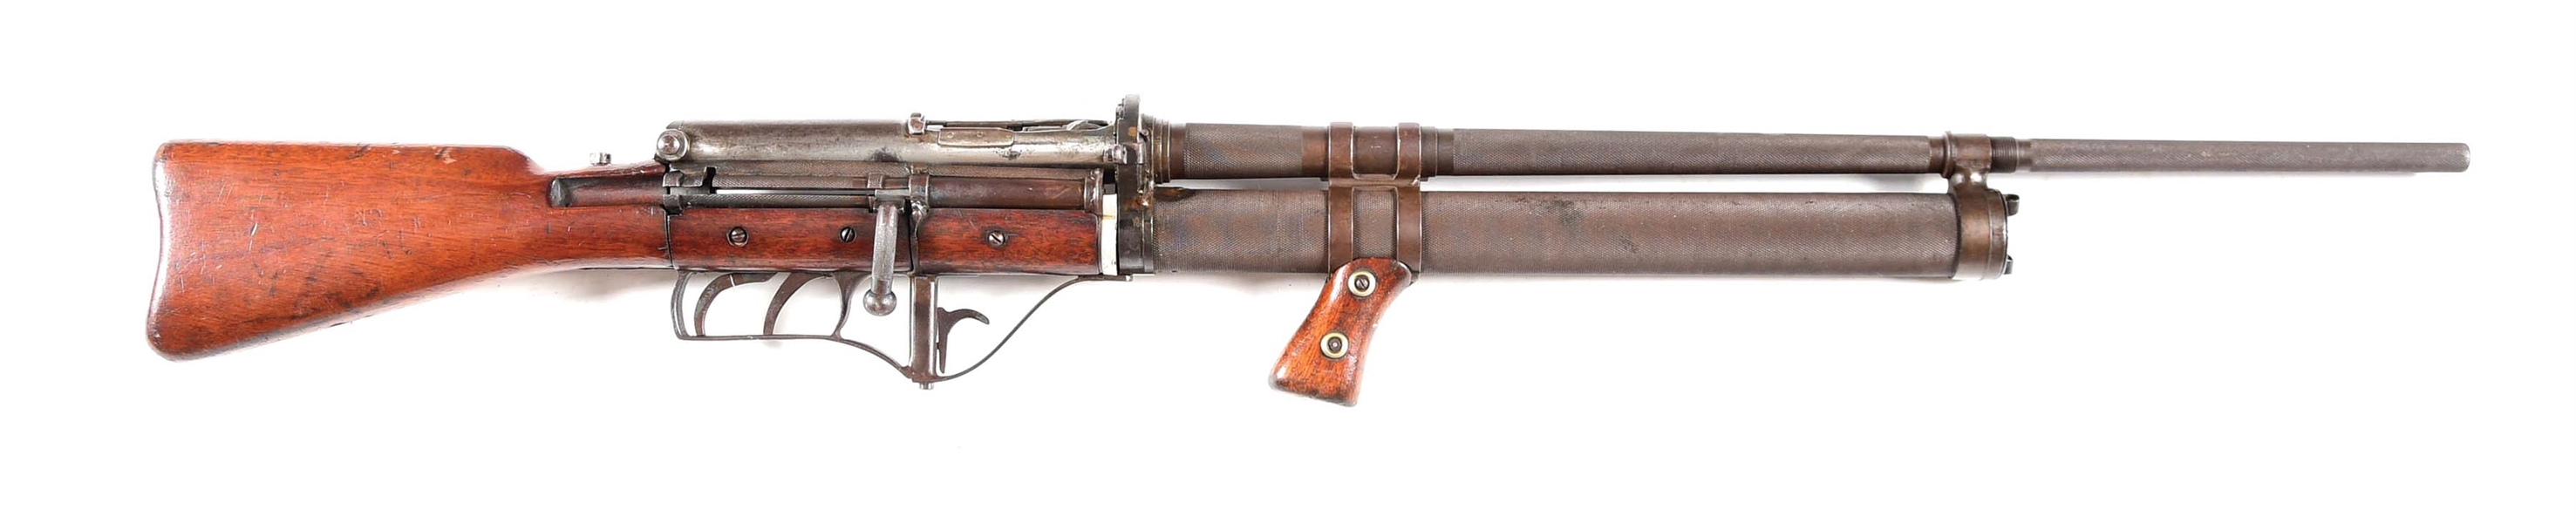 A RARE AND HISTORIC PROTOTYPE MCCLEAN MACHINE GUN PARTS KIT.